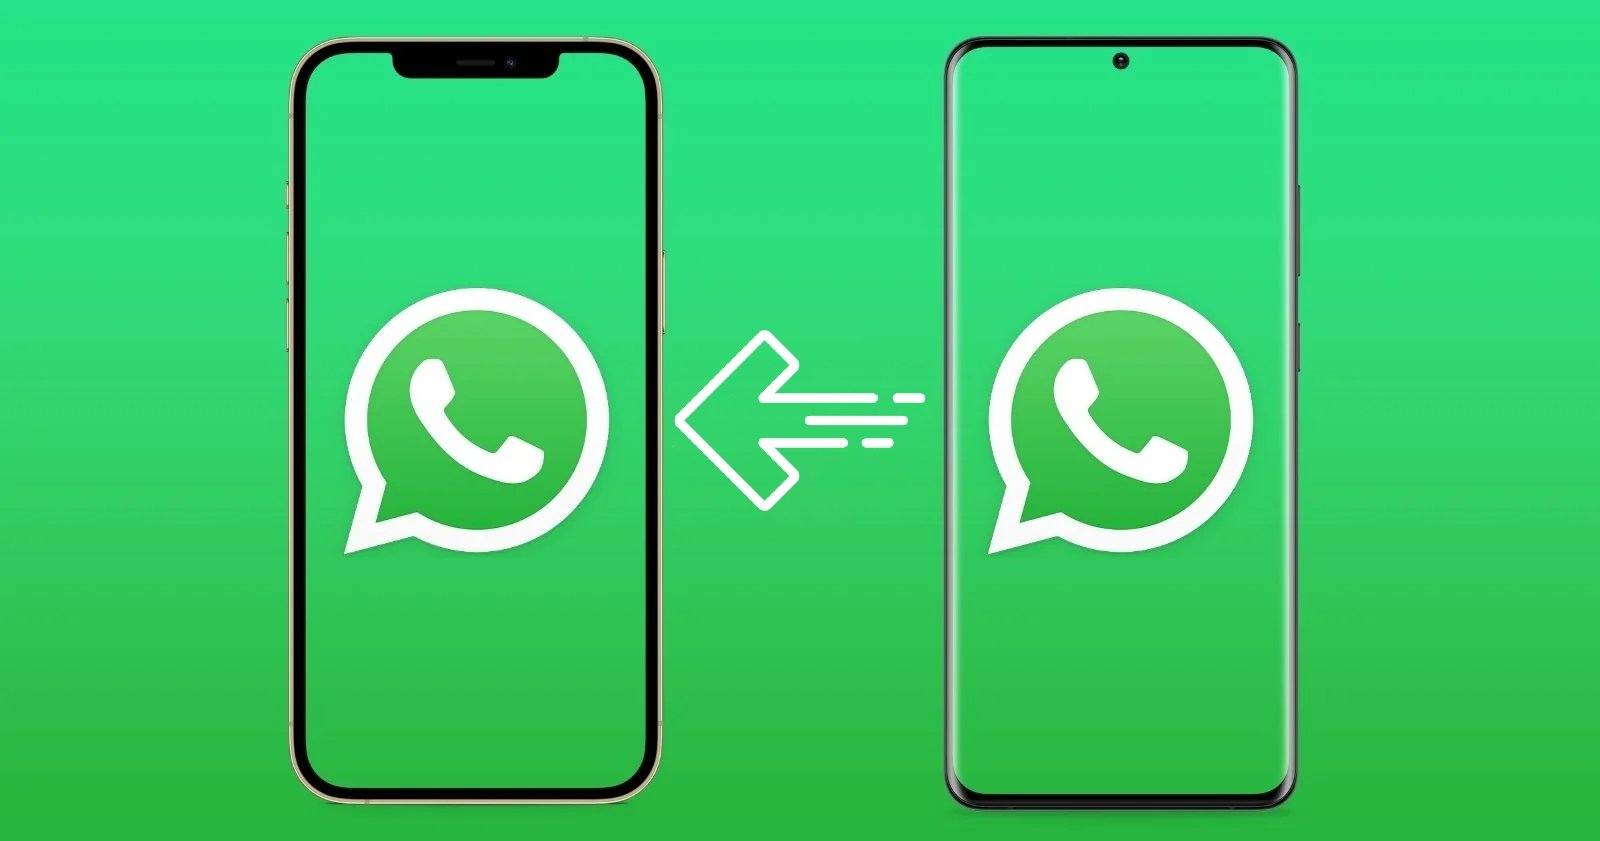 Transferir chats de Android a iOS en WhatsApp